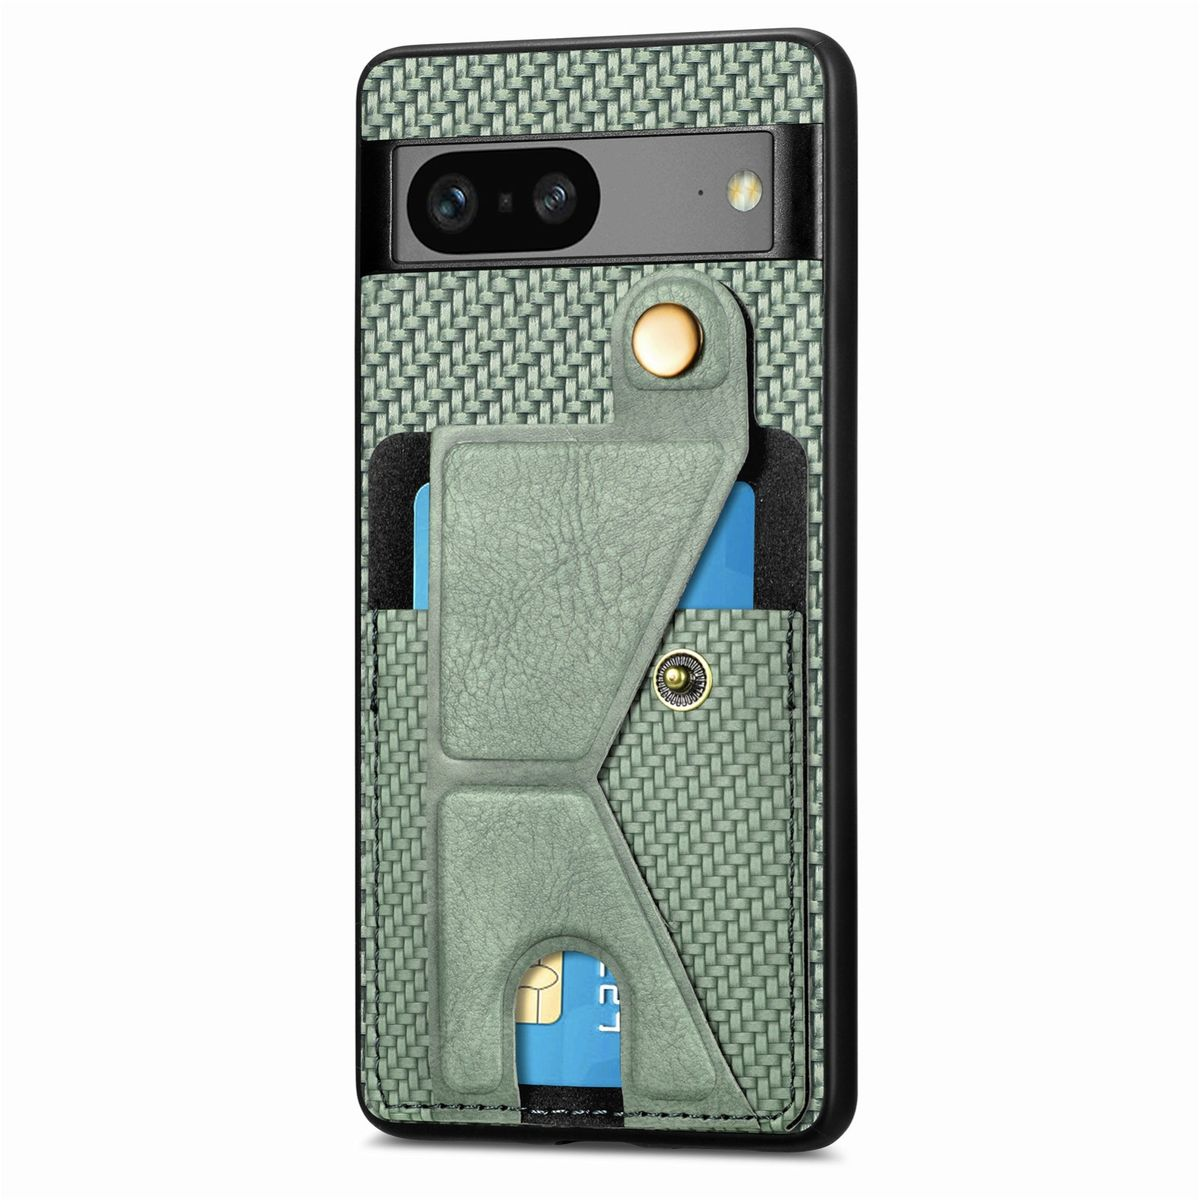 Handy Grün Case Cover, WIGENTO 7A, 1x Google, Backcover, Schutzhülle Carbon Pixel